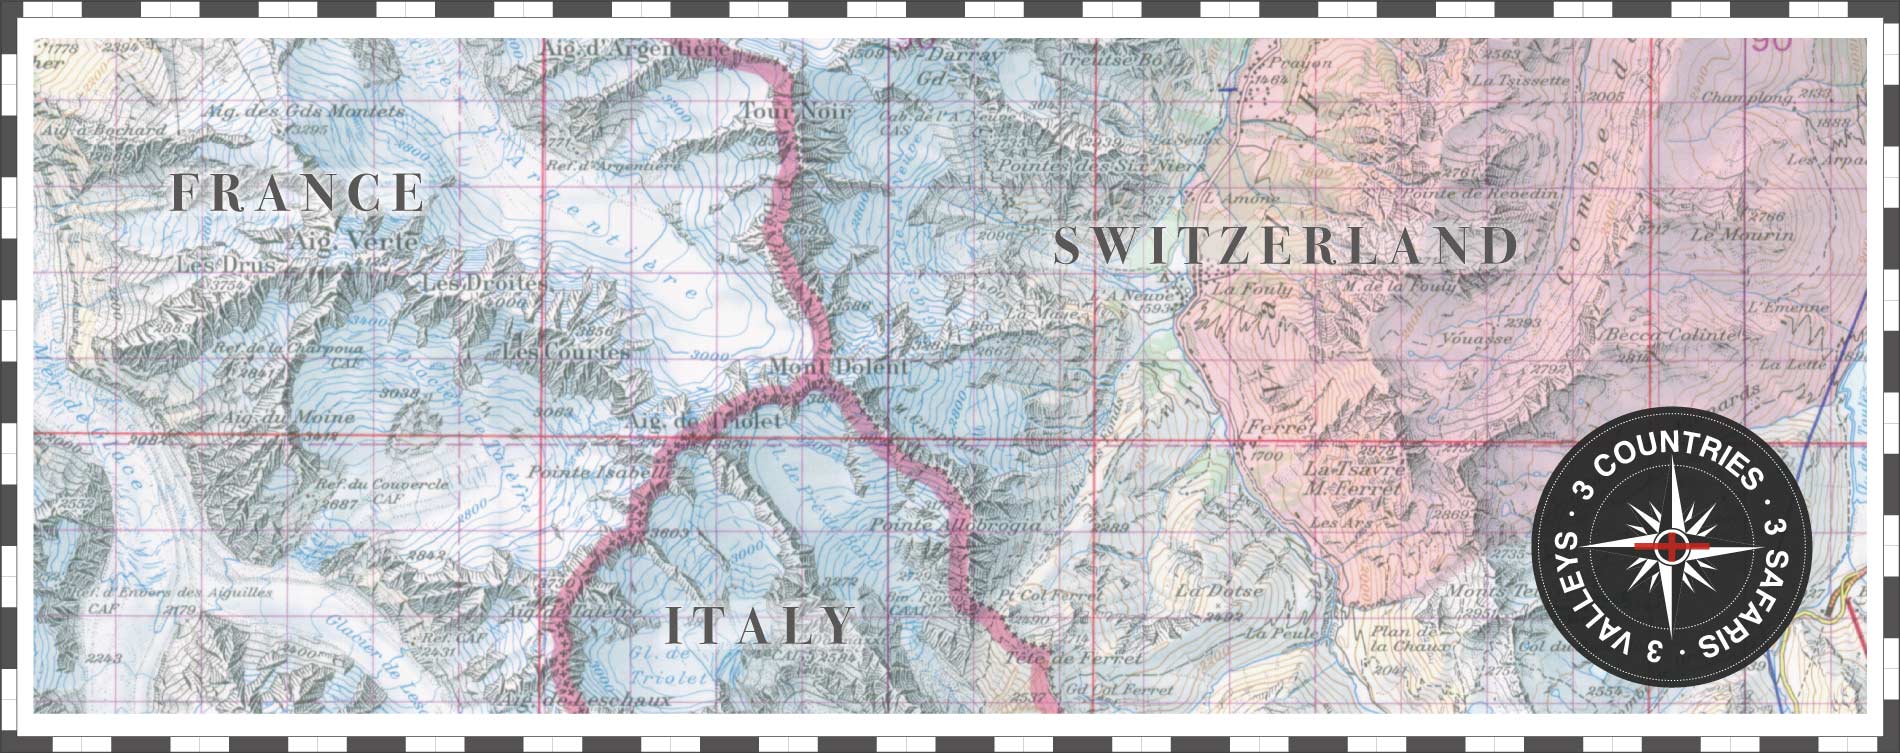 Swisskisafari- between-Switzerland-Italy-and-France